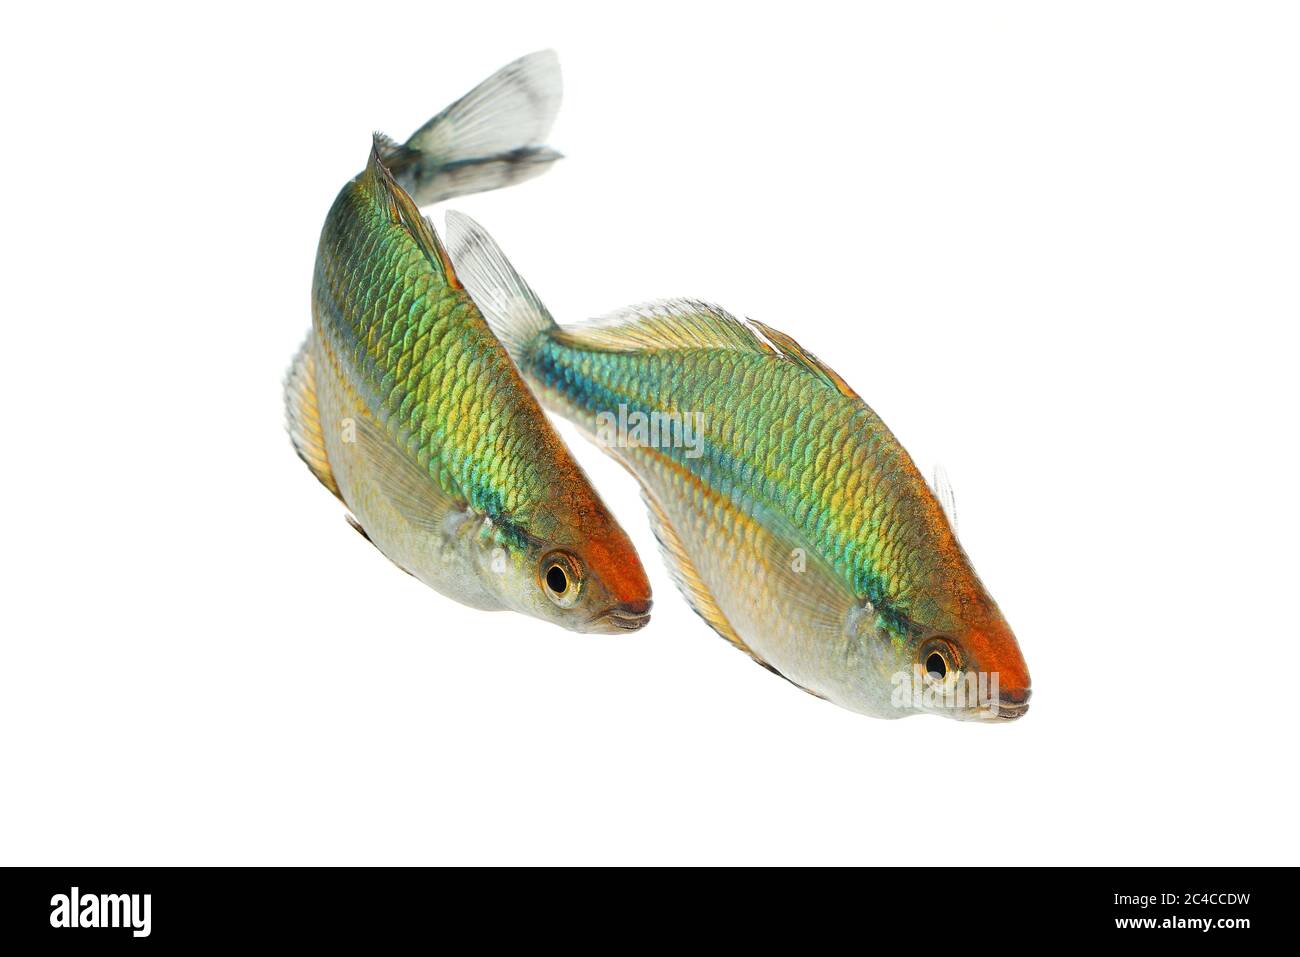 Turquoise Rainbowfish Aquarium Fish Lake Kutubu rainbowfish Melanotaenia lacustris Stock Photo